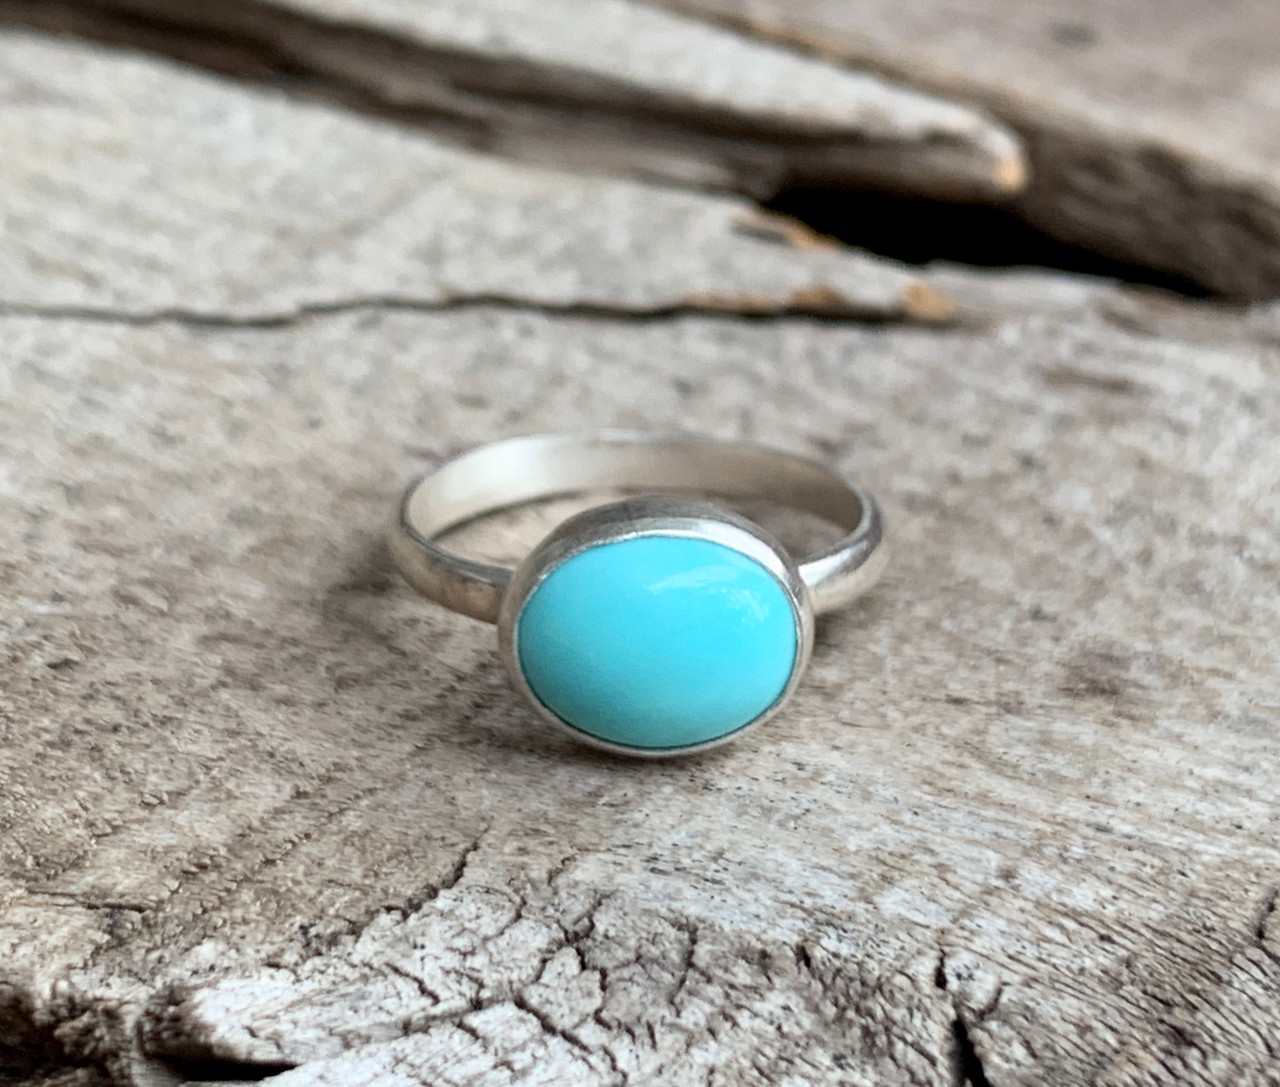 Light Blue Sapphire and Diamond Three Stone Ring